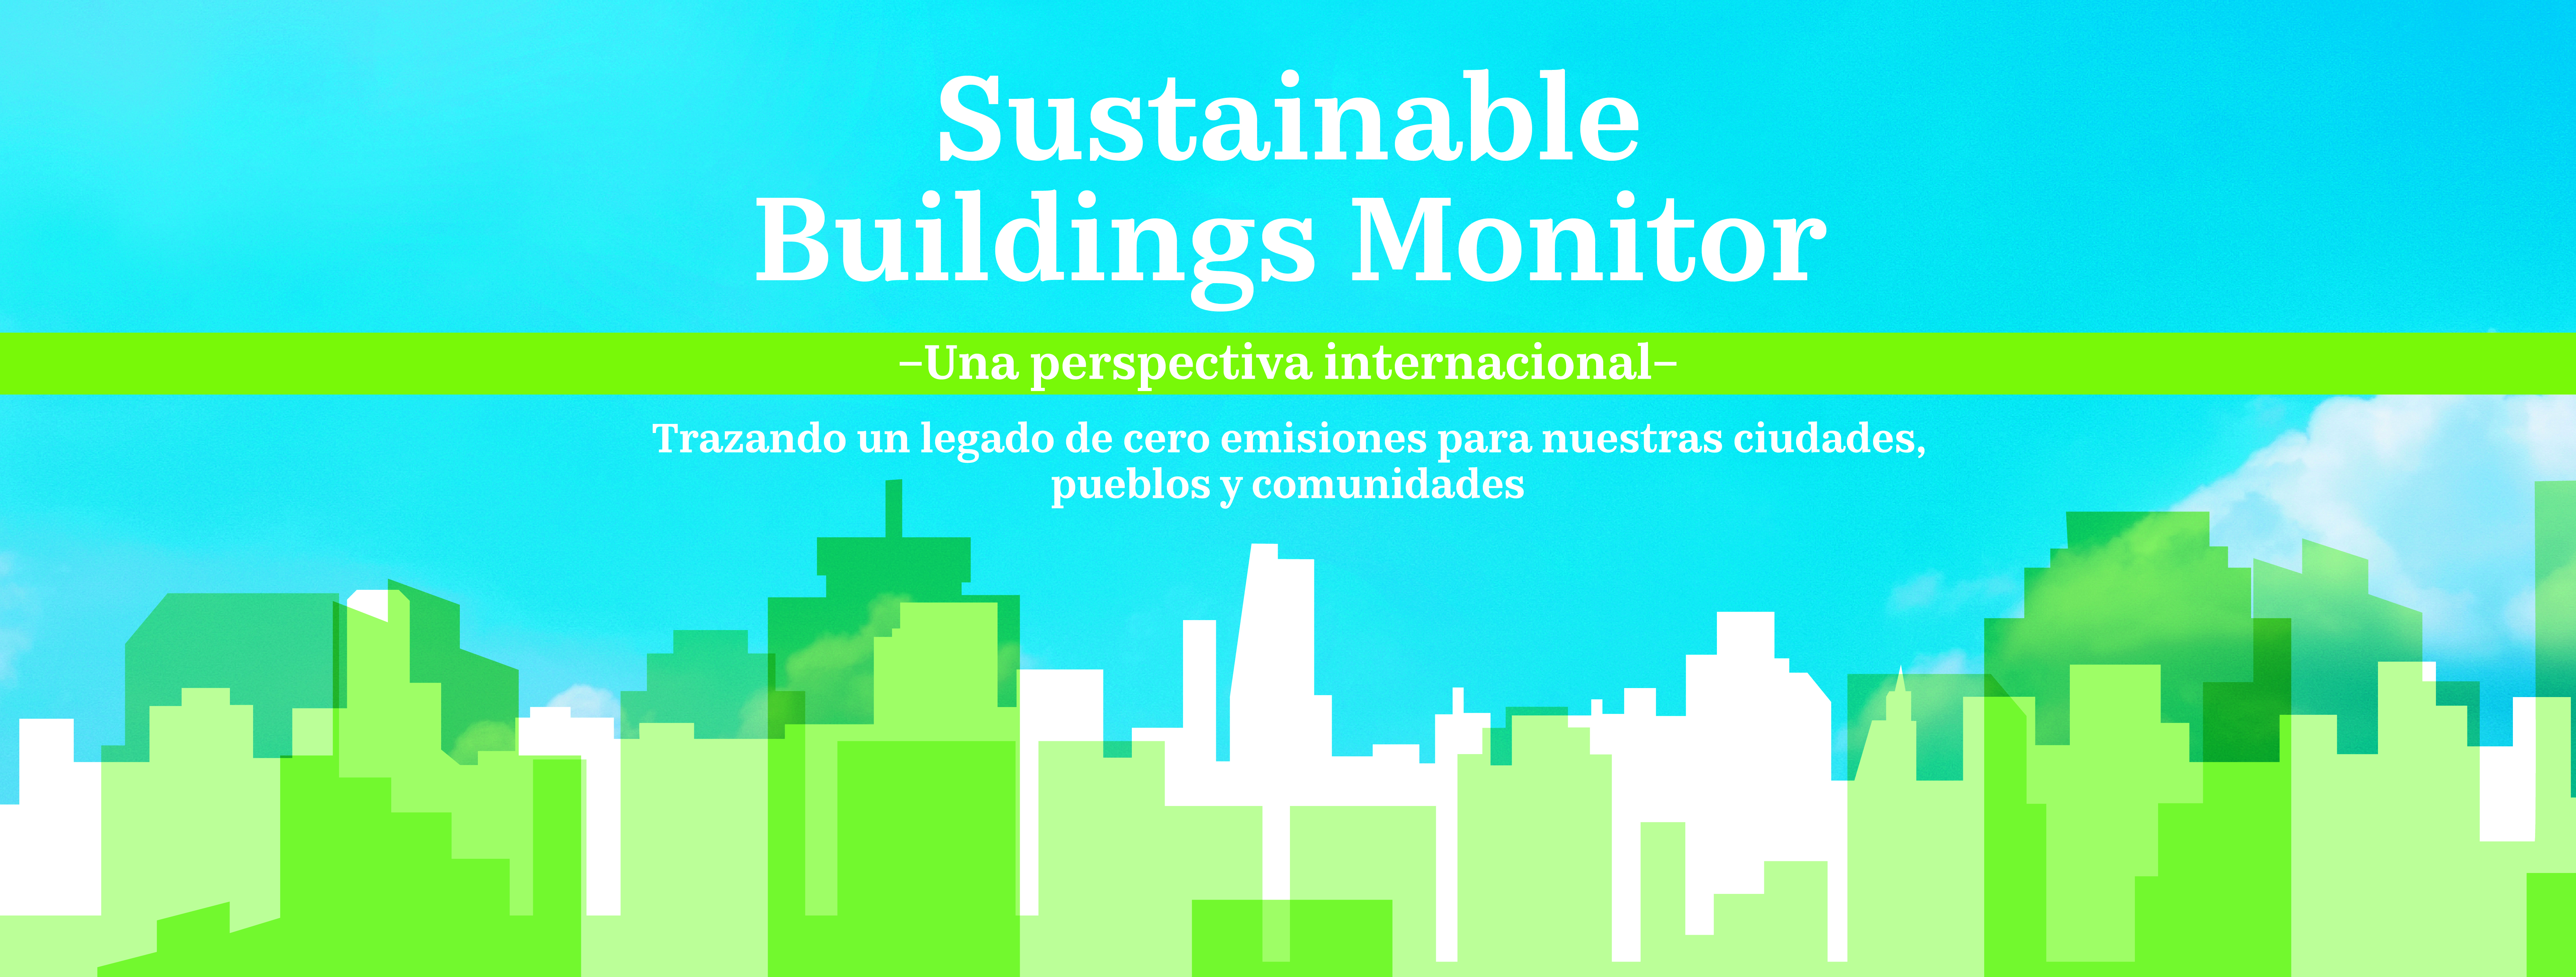 sustainability graphic | ISG